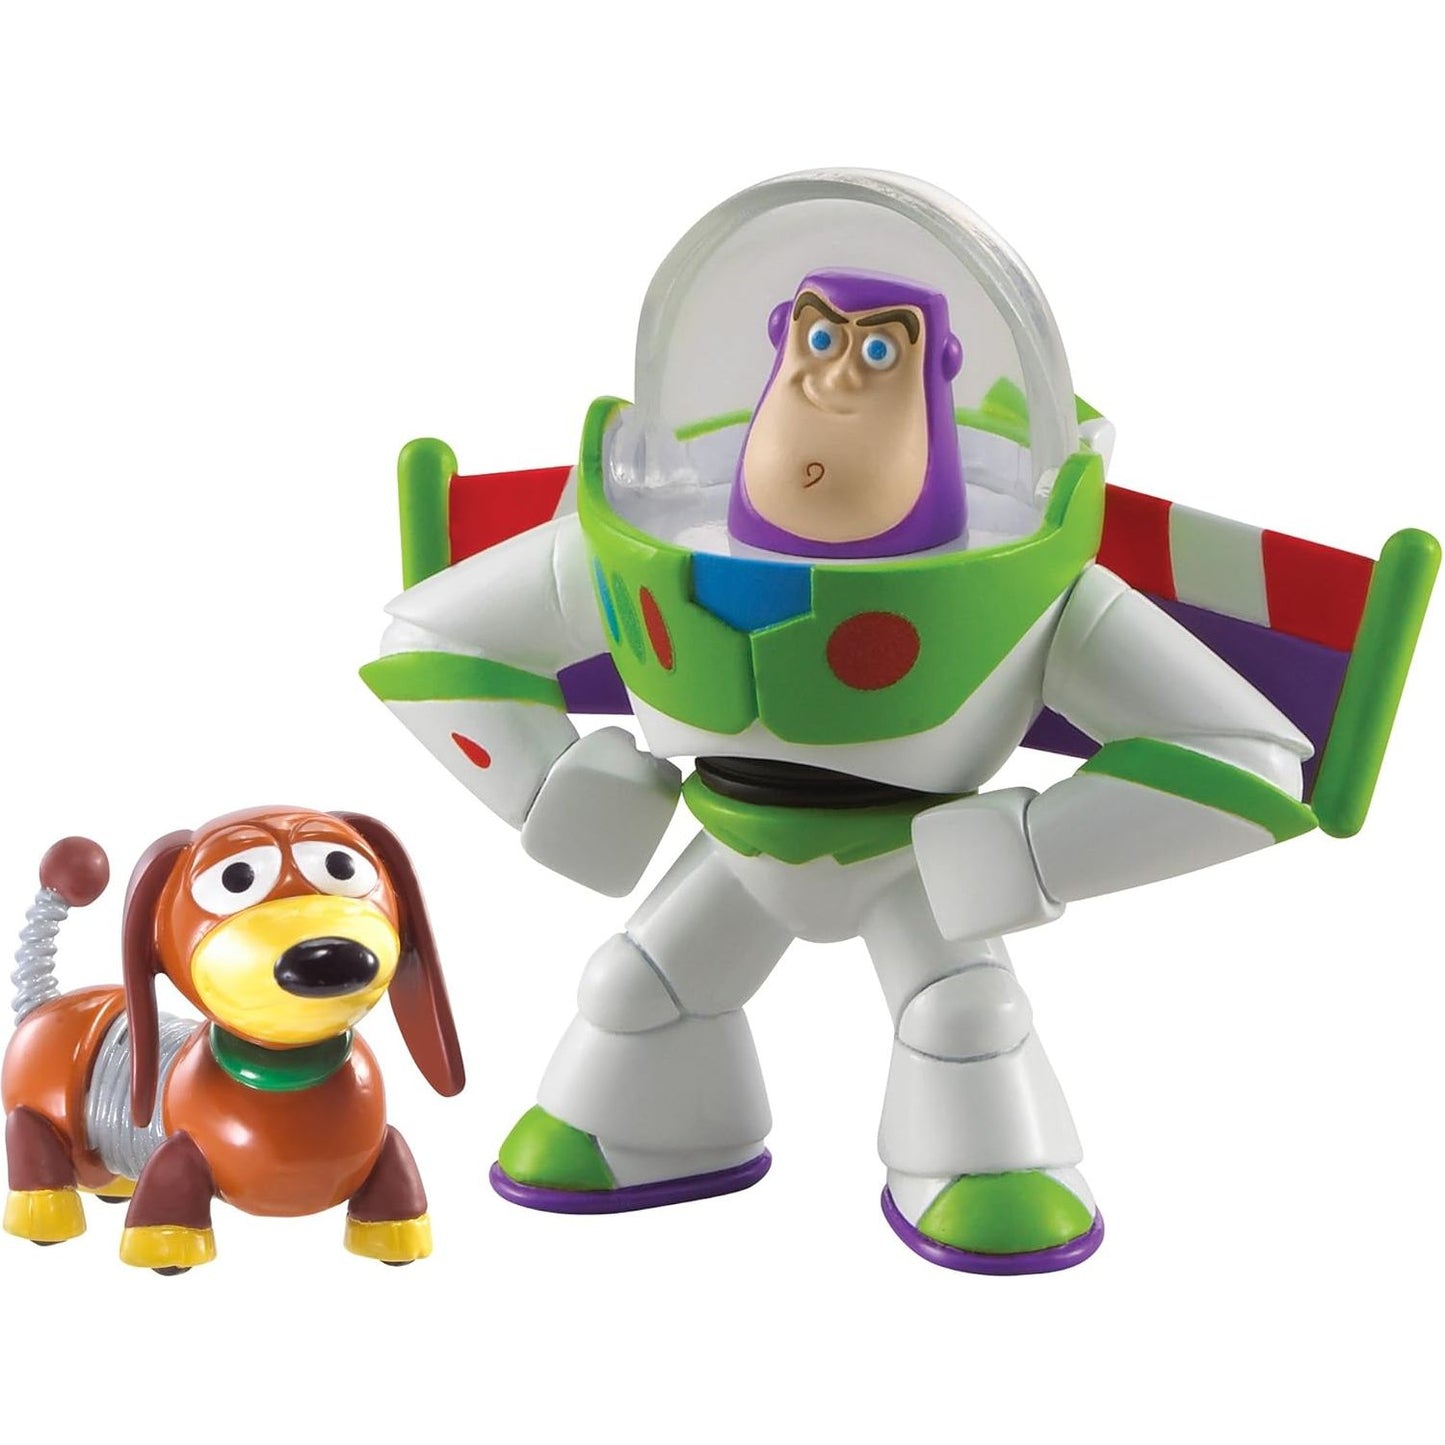 Disney Buzz Lightyear and Slinky Dog Toy Figurines Products